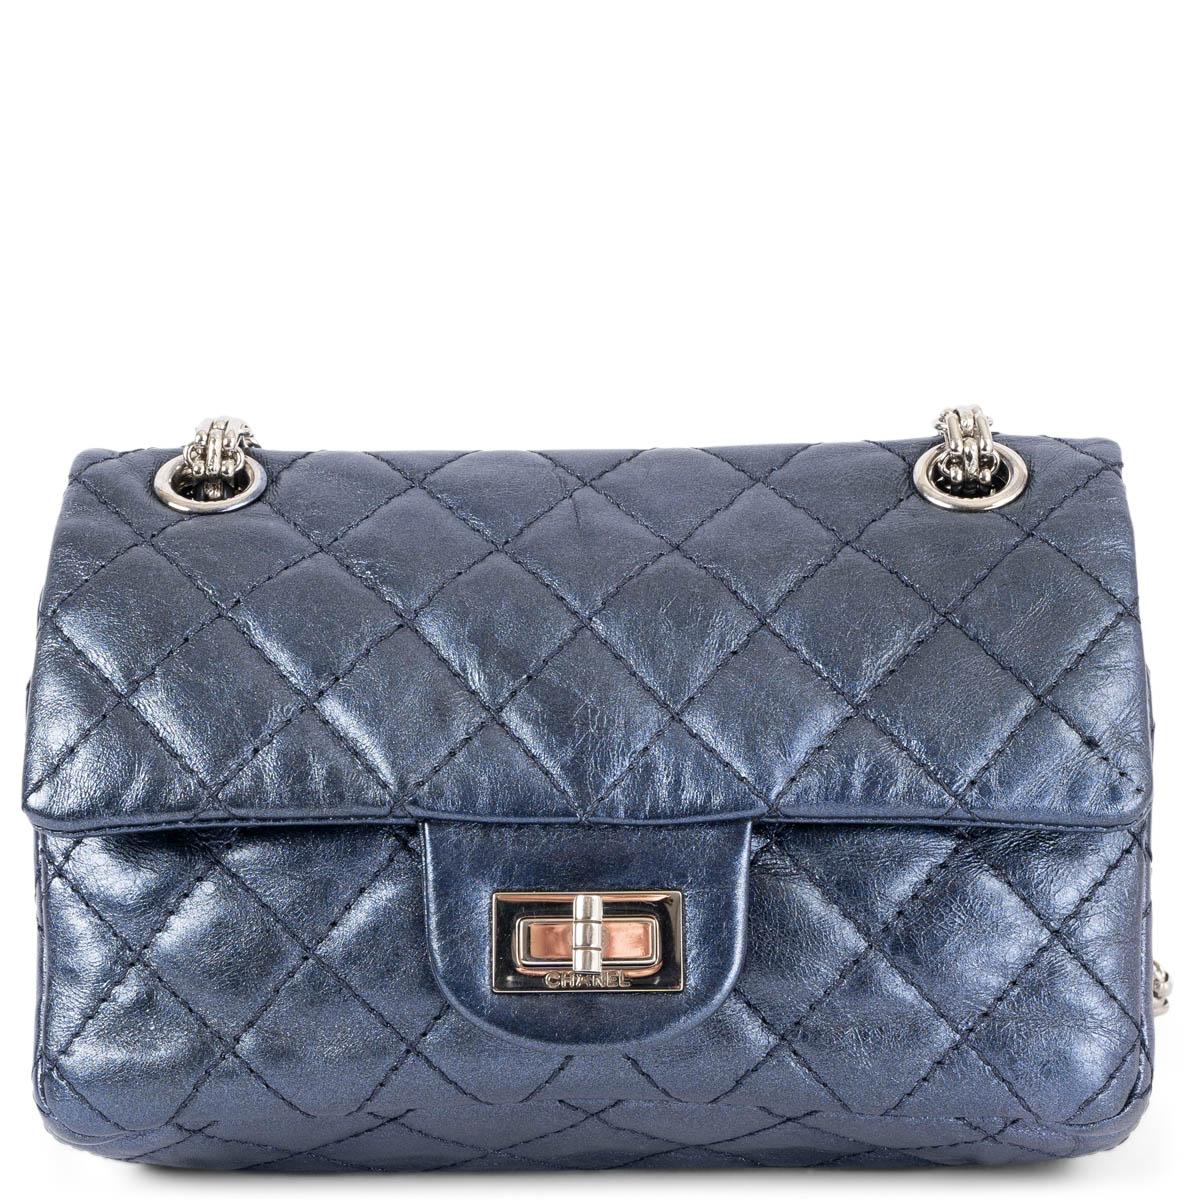 CHANEL metallic blue leather 2.55 REISSUE MINI FLAP Shoulder Bag For Sale